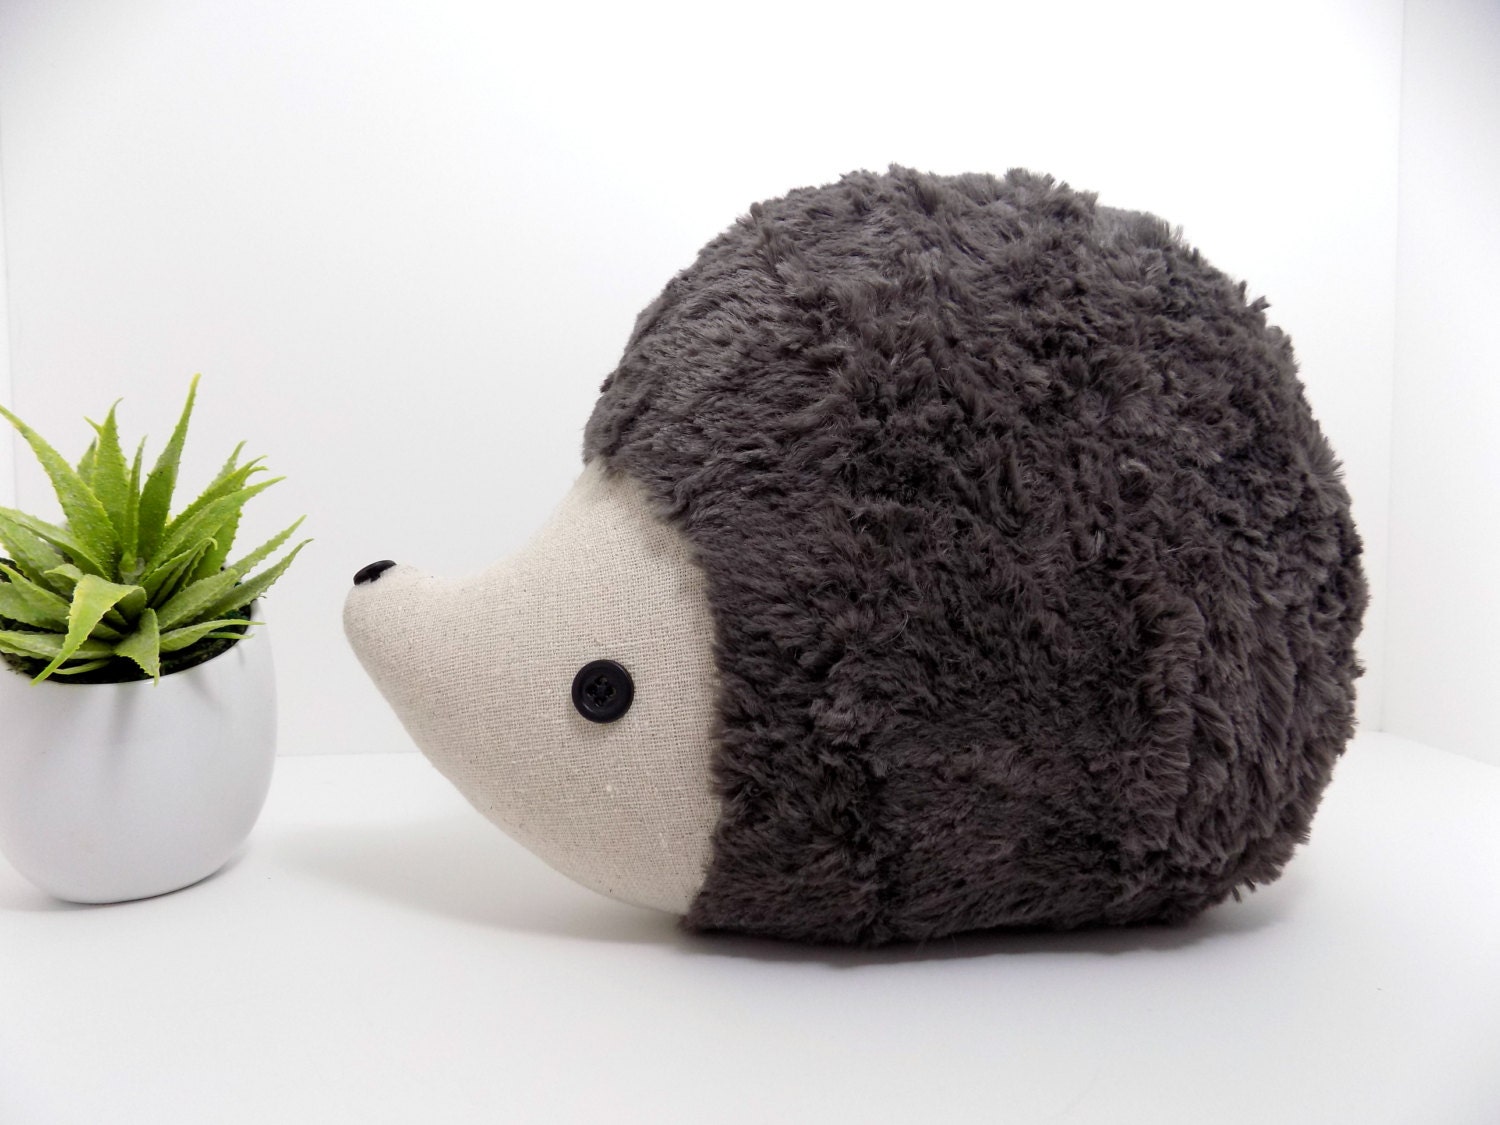 Hedgehog pillow plush in pewter grey/brown hedgehog stuffed1500 x 1125